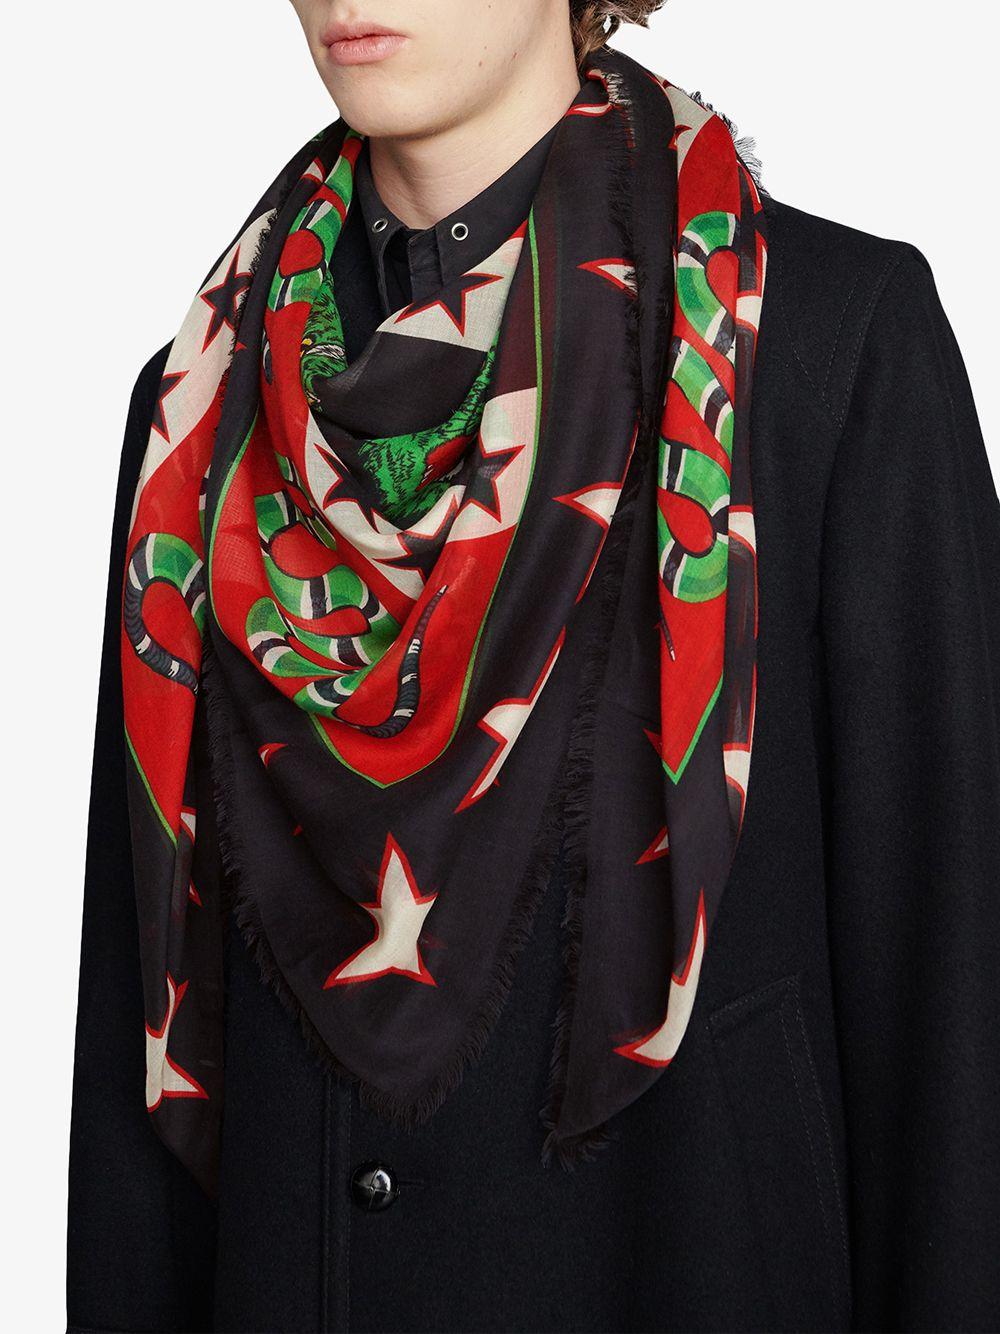 Gucci Silk Modal Shawl With Symbols Print in Black for Men - Lyst